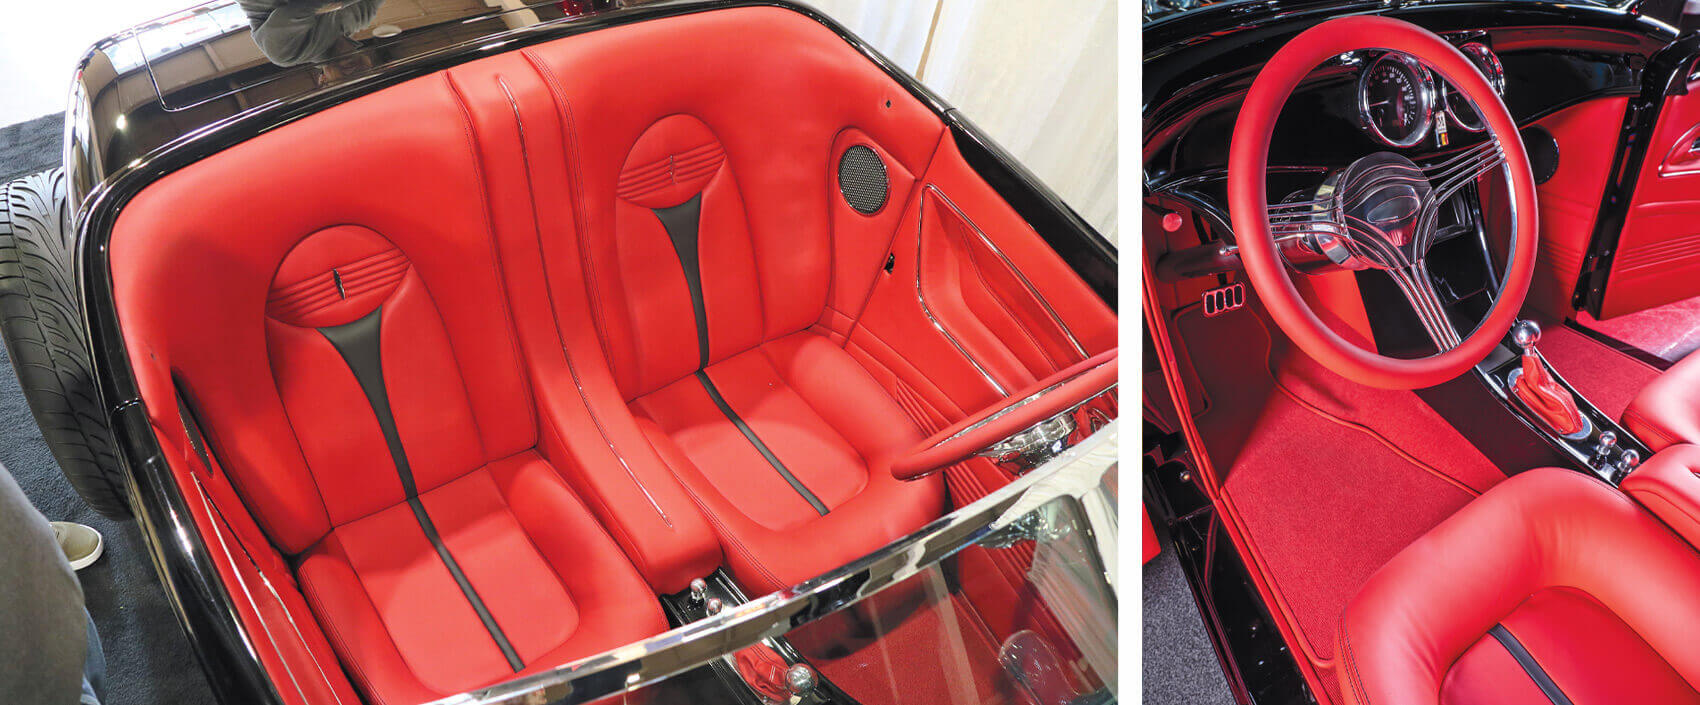 Ford Muroc Fenderless Roadster Engine lipstick red interior